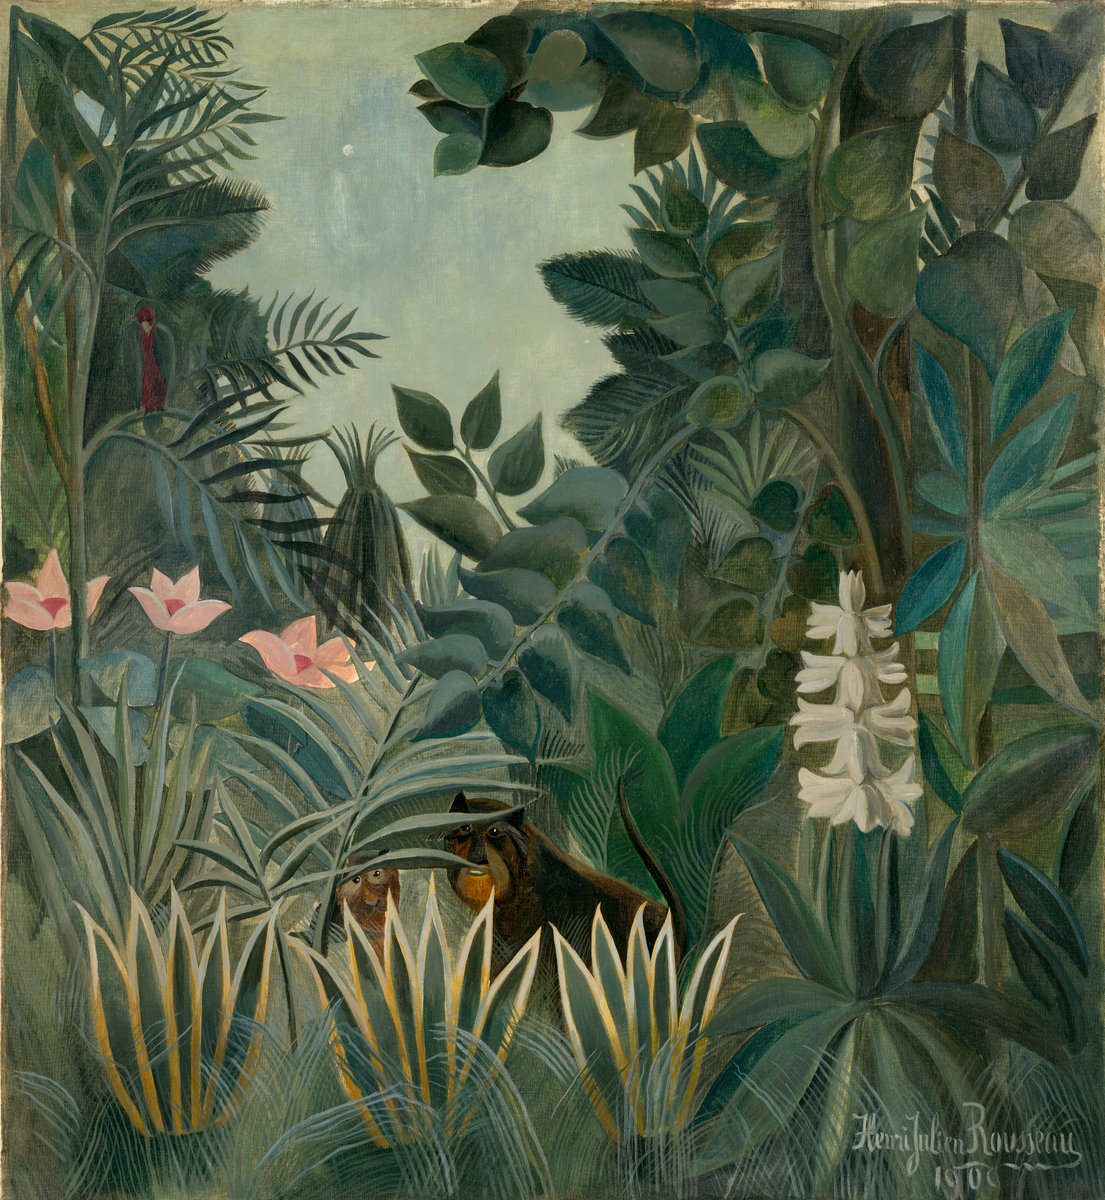 Figue. 17 -La forêt tropicale, Henri Rousseau, 1909. National Gallery of Art, Washington. Chester Dale Collection.